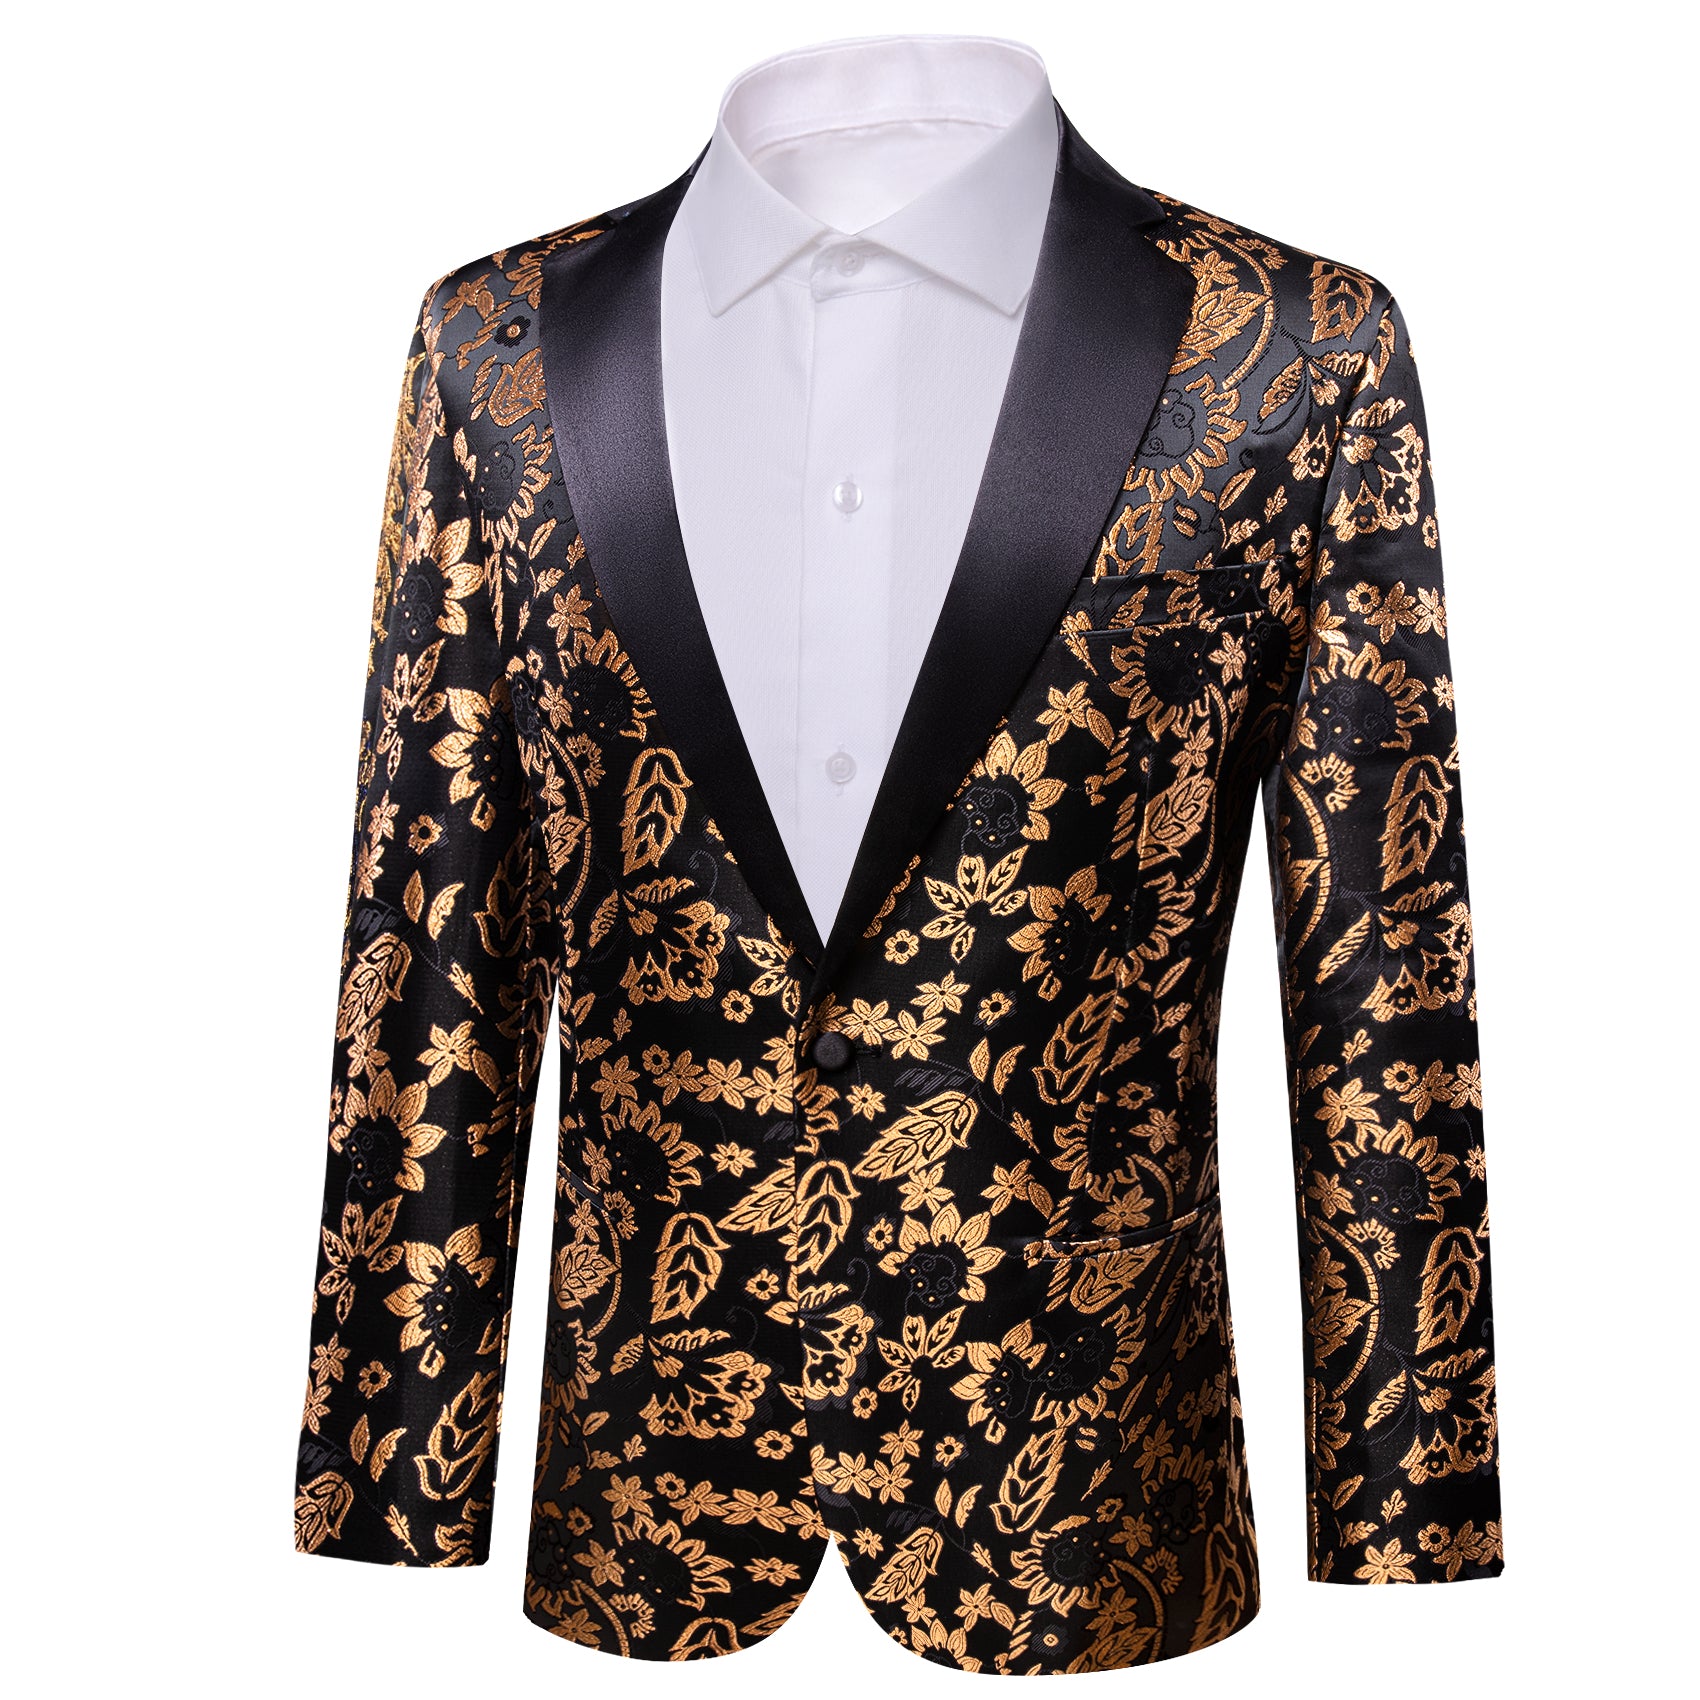 Men's Dress Black Gold Floral Suit Jacket Slim One Button Stylish Blazer